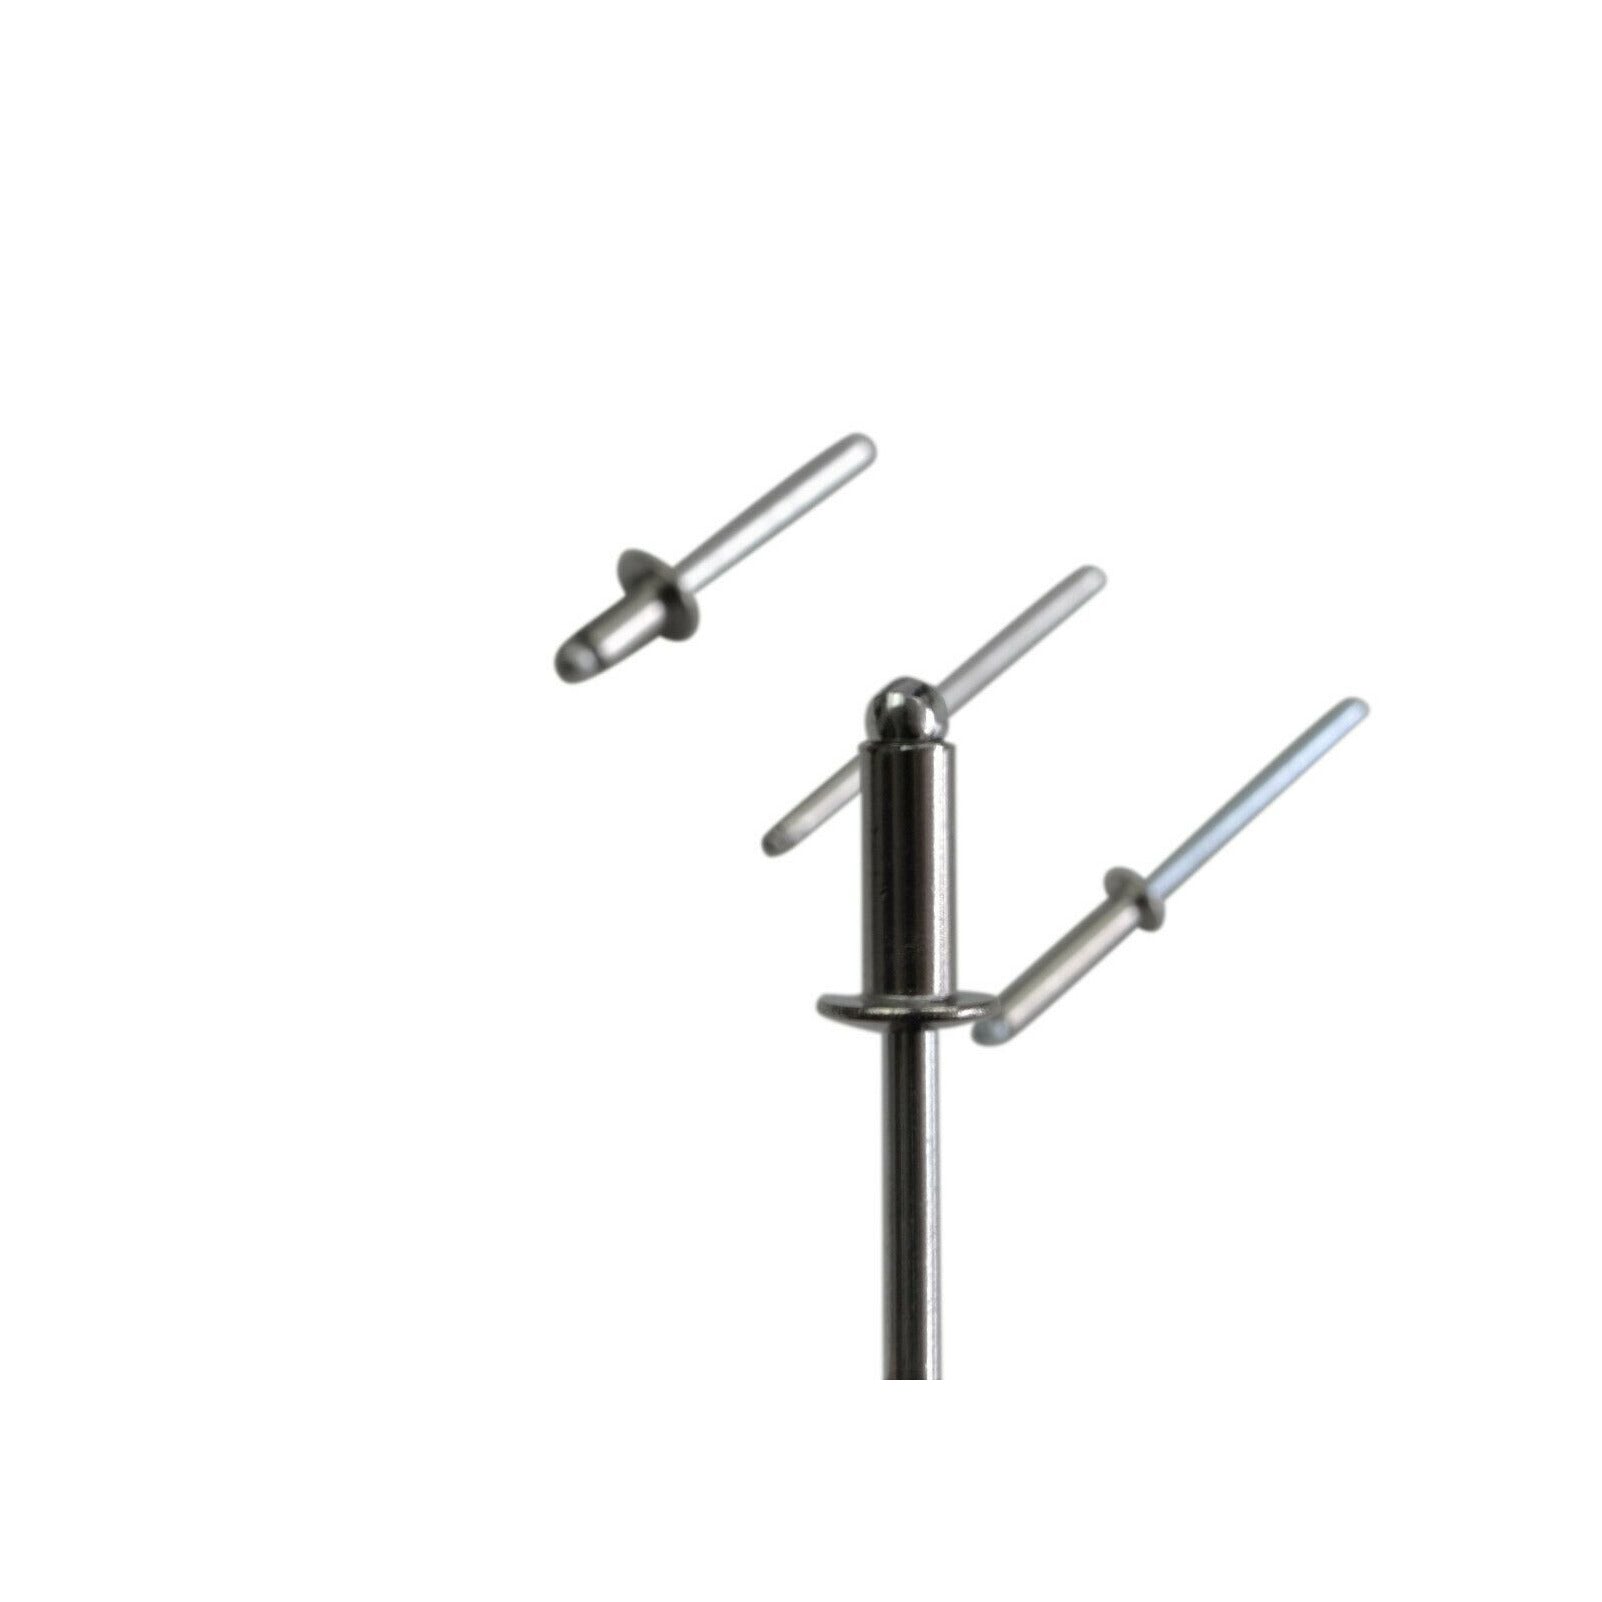 510 pc 304 Stainless Steel Pop Rivet Assortment Kit 6 mm to 25 mm stalk size